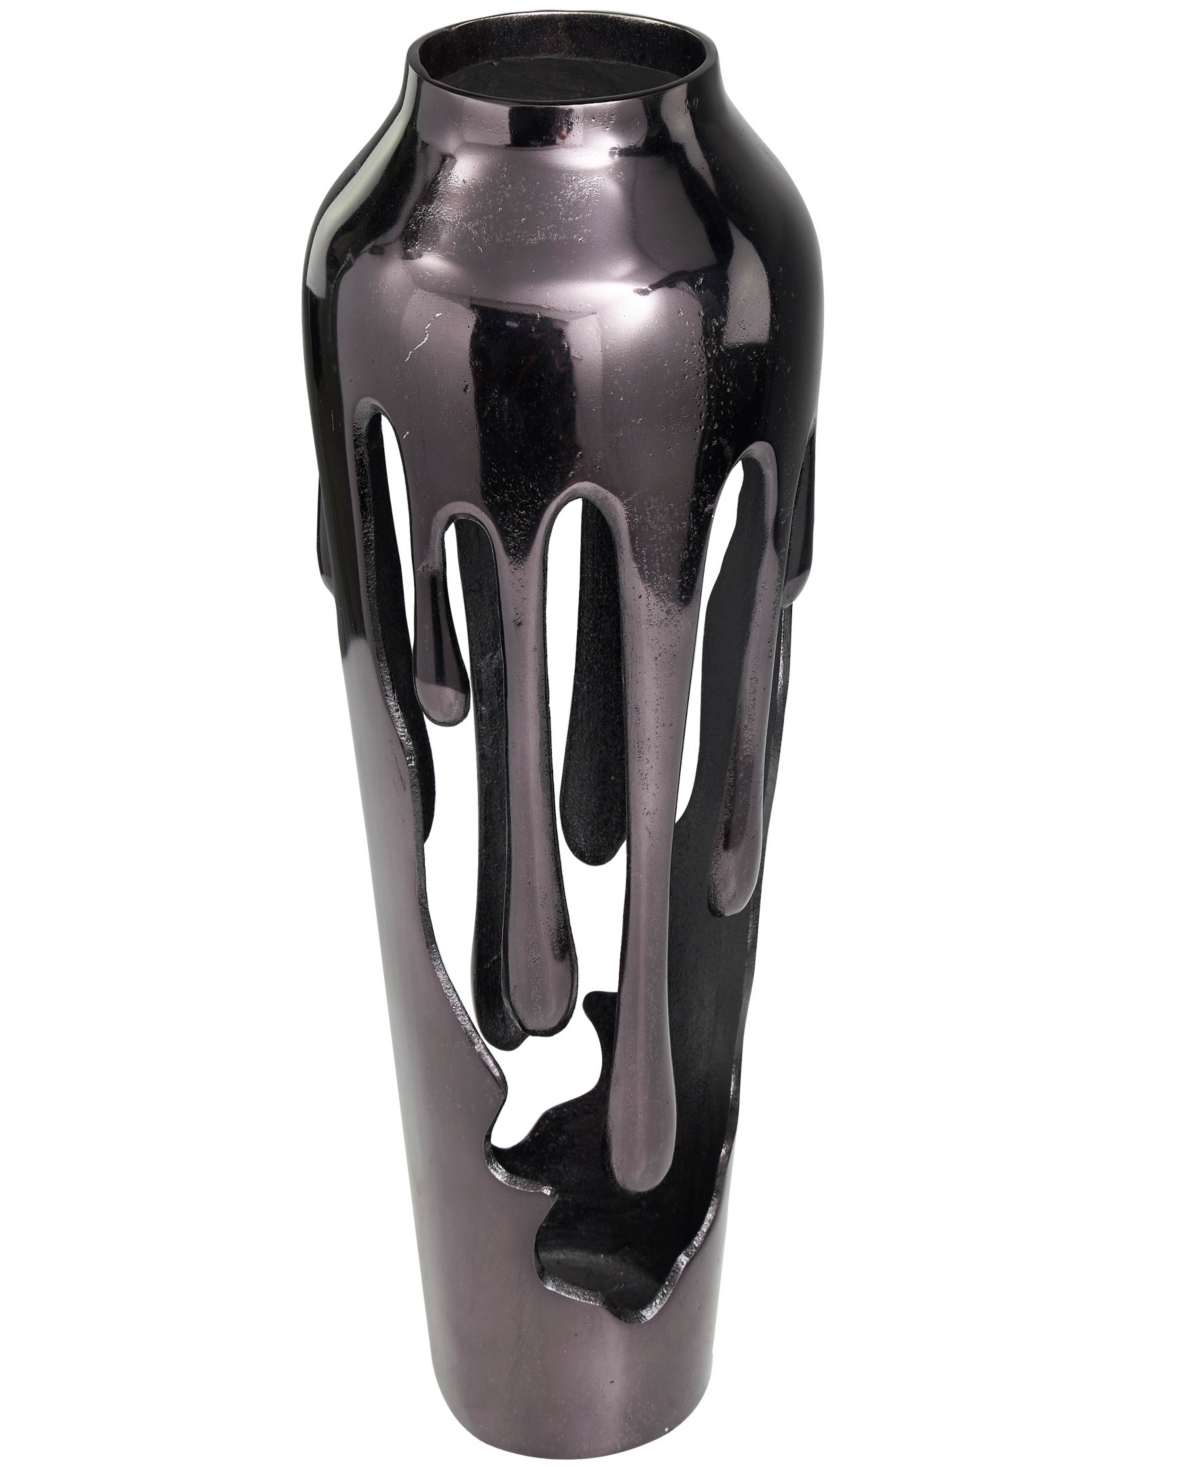 Rosemary Lane Aluminum Drip Vase With Melting Designed Body, 8" X 8" X 19" In Black